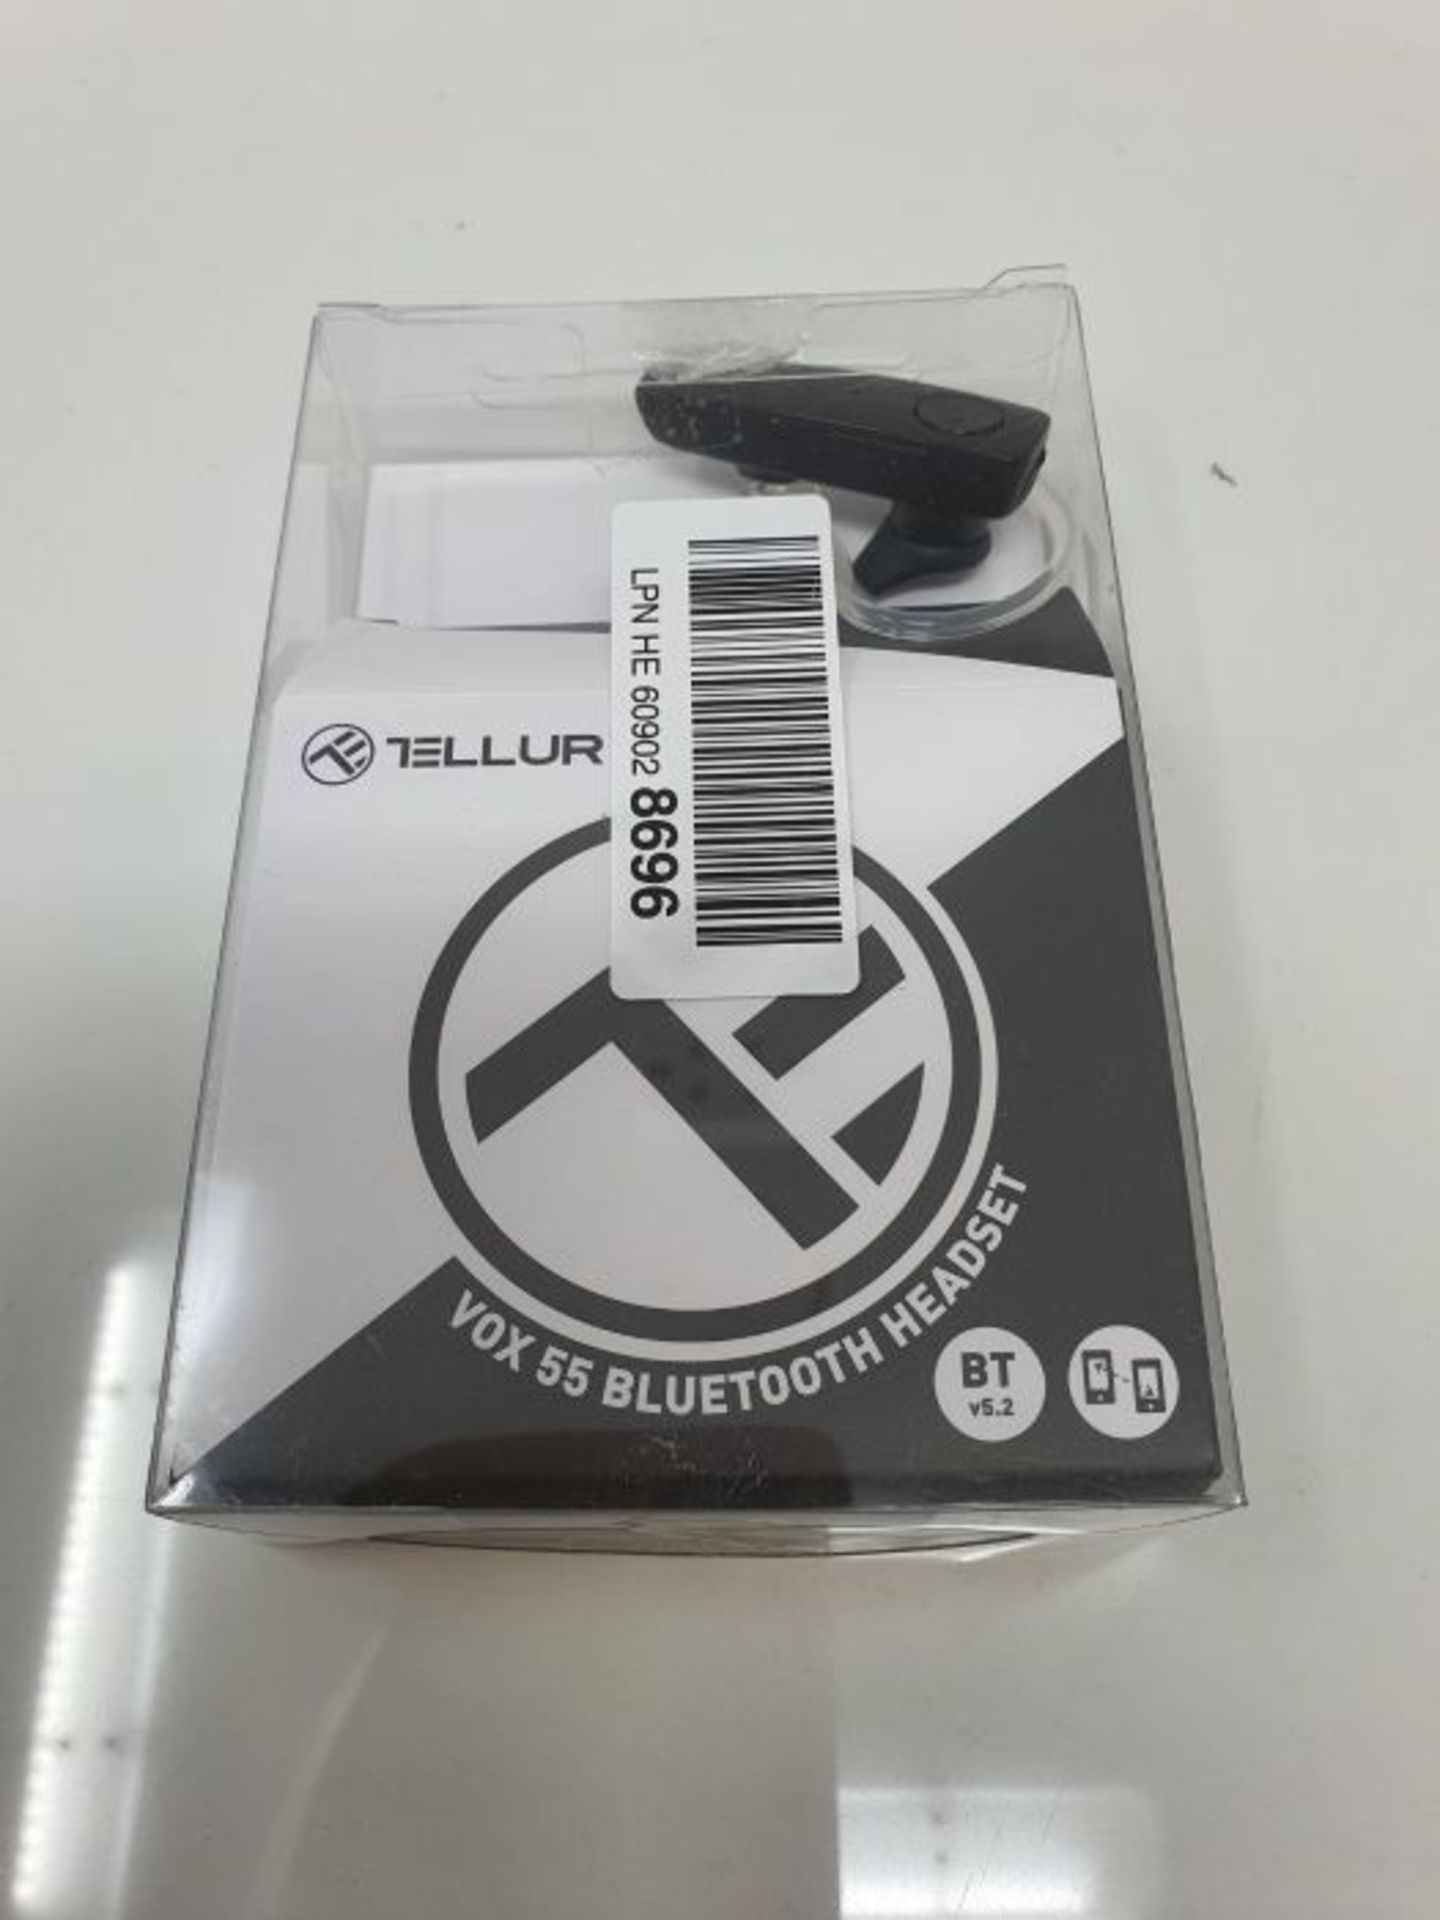 TELLUR Vox 55 Bluetooth Headset, Multipoint, Black - Image 2 of 3